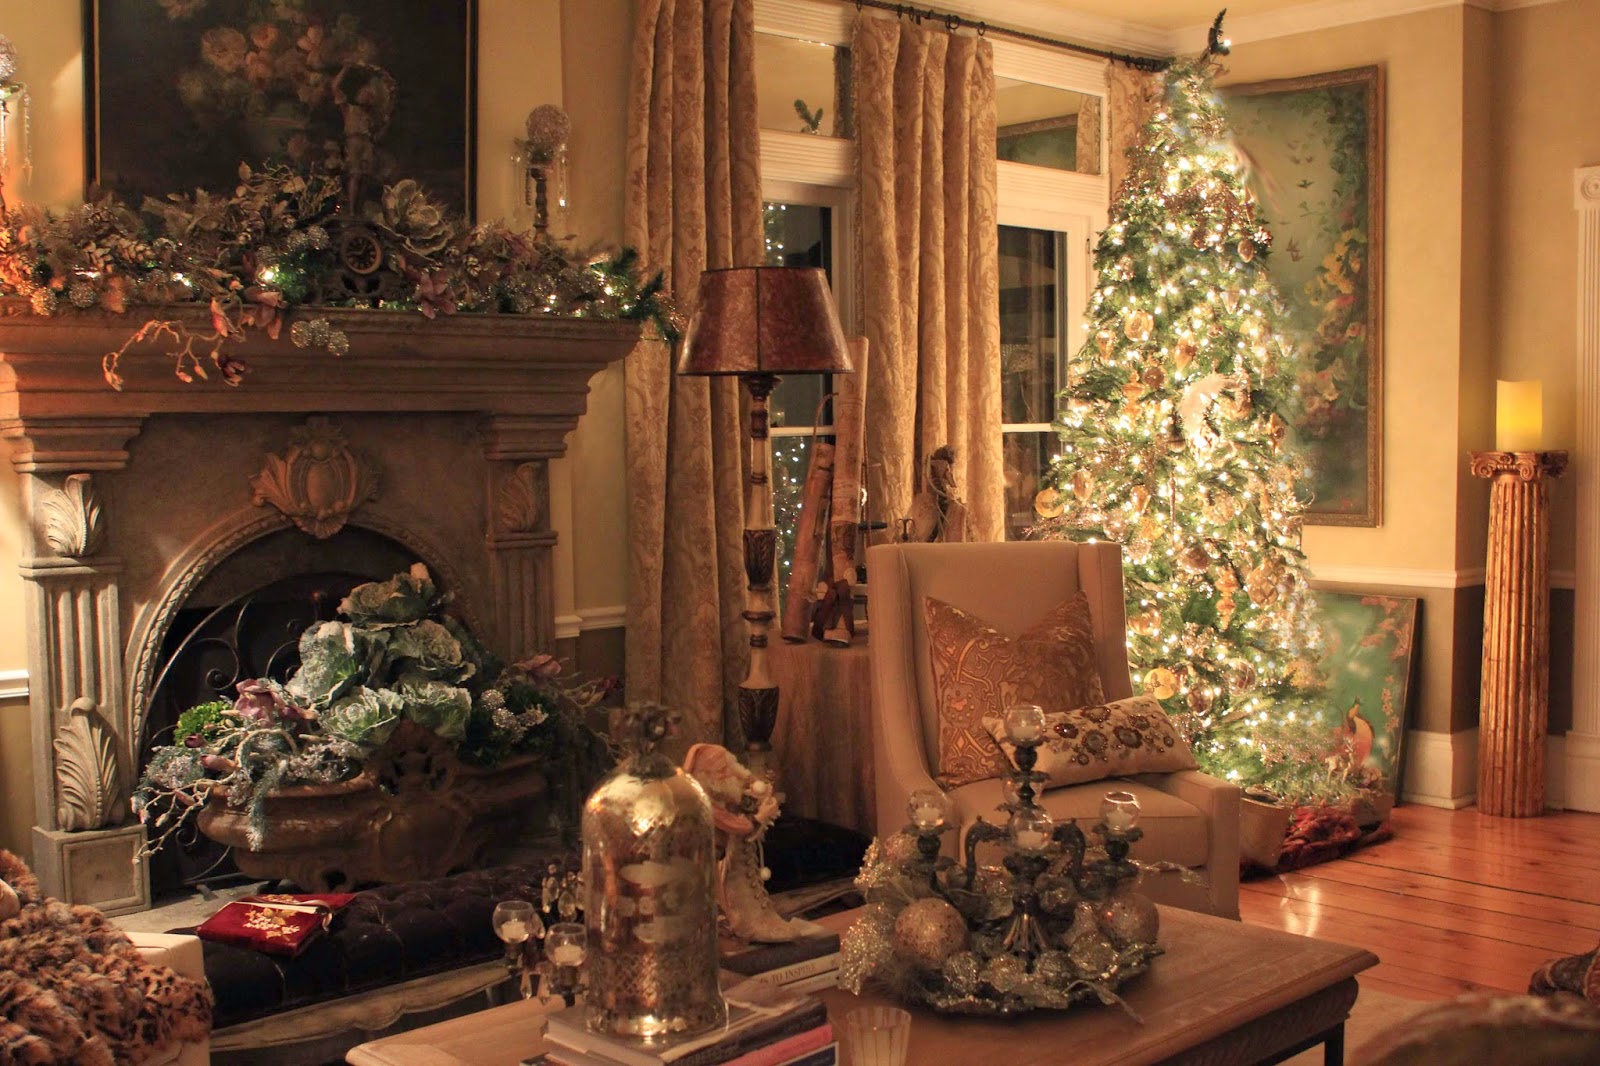 Romancing the Home: Christmas Decor- More Memories